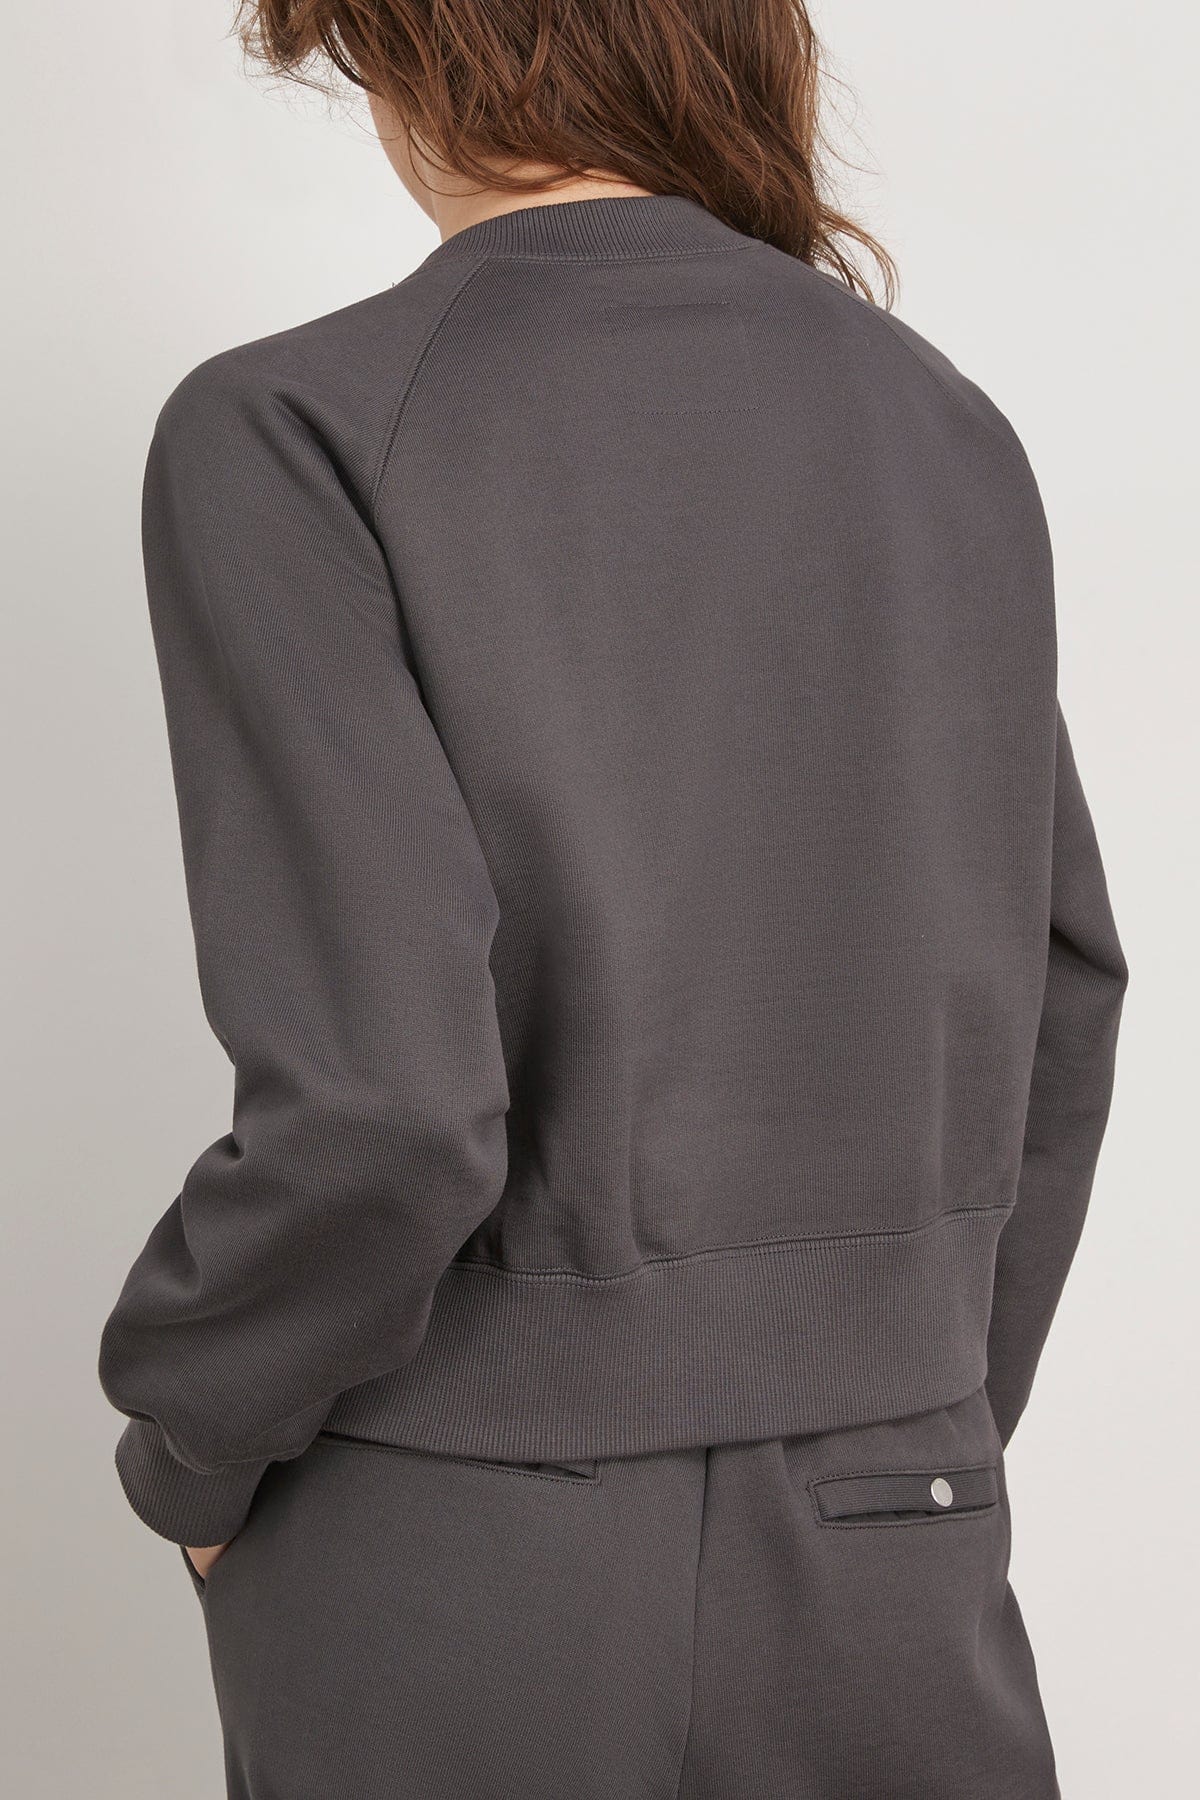 Sacai Sweatshirts Sweat Jersey Pullover in Charcoal Gray Sacai Sweat Jersey Pullover in Charcoal Gray